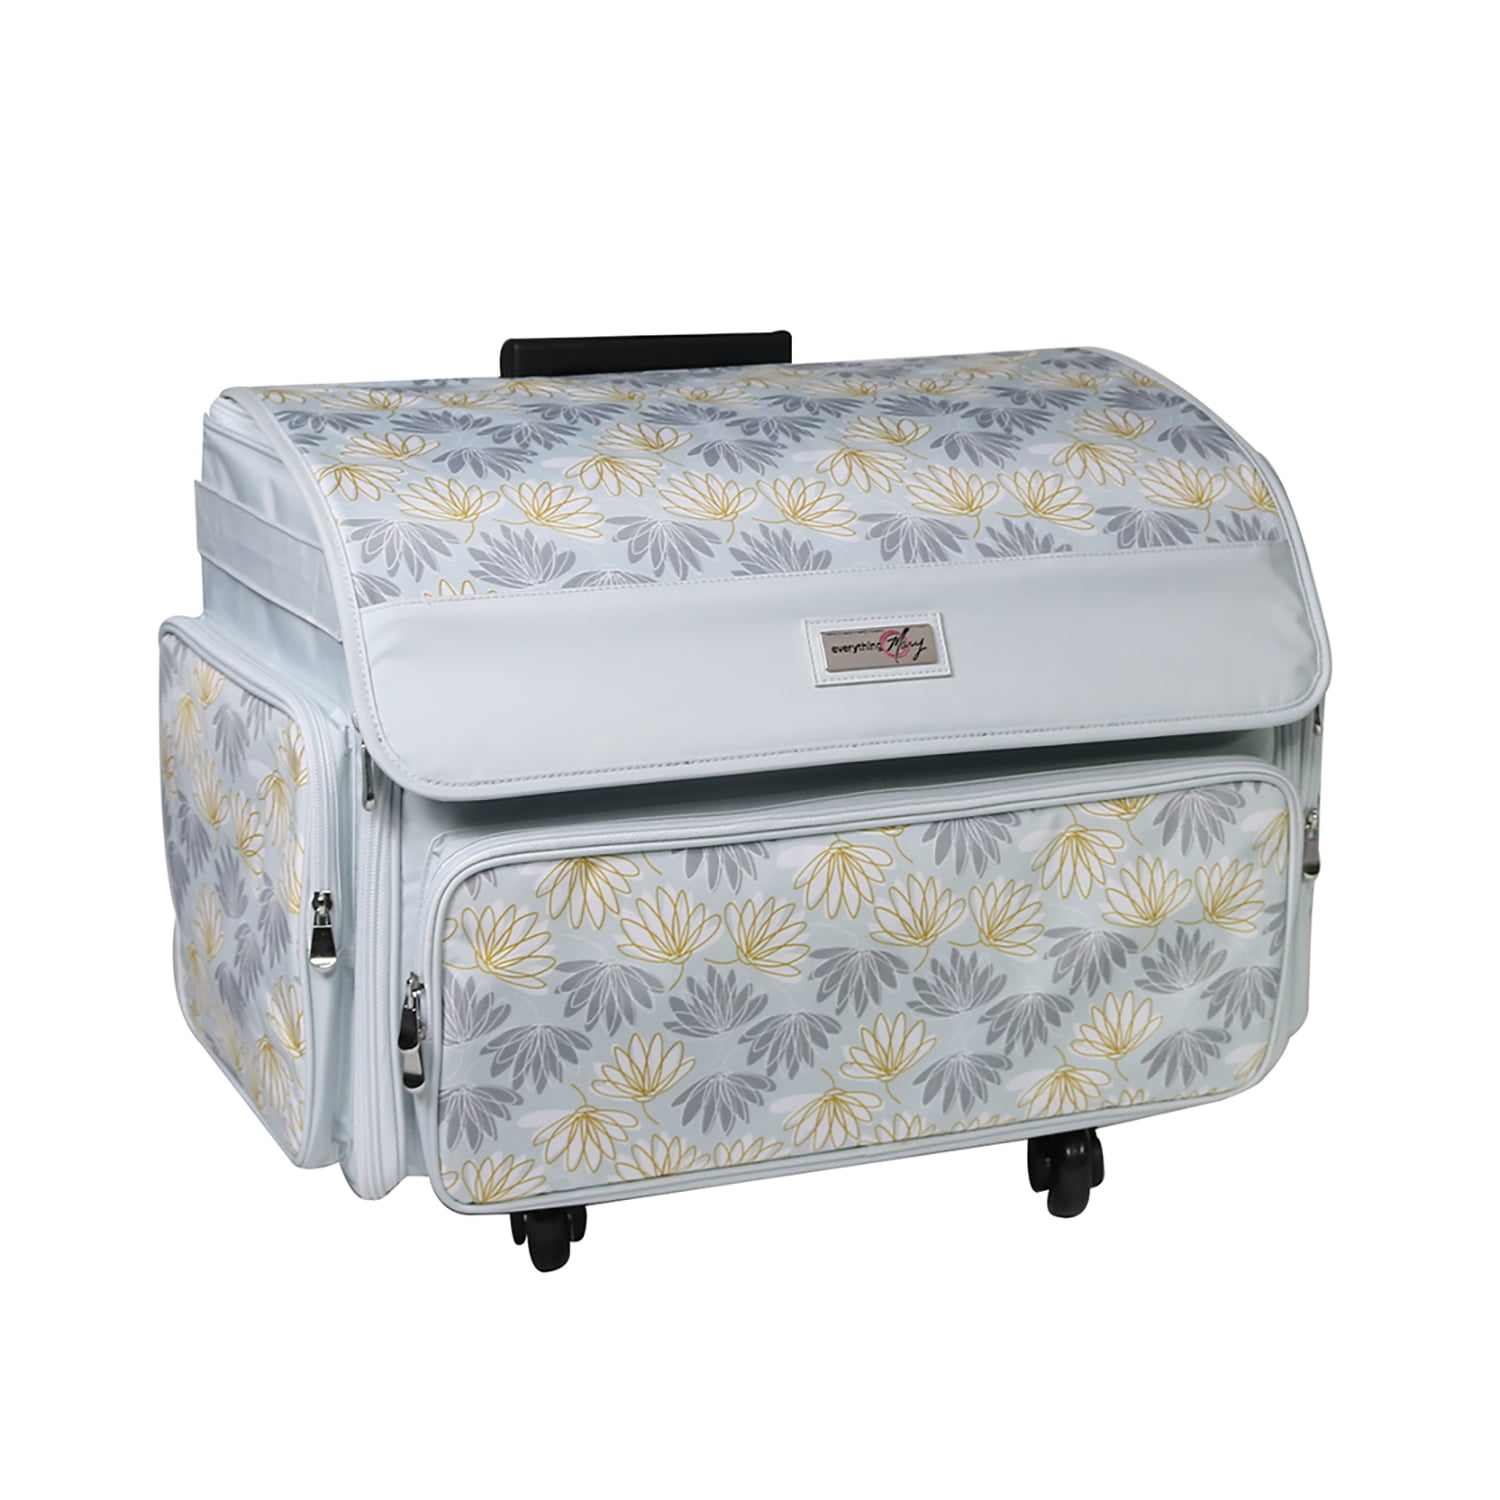 Hobby Gift Mr4660 EAL Sewing Machine Storage and Travel Bag, 47 x 21 x 33cm